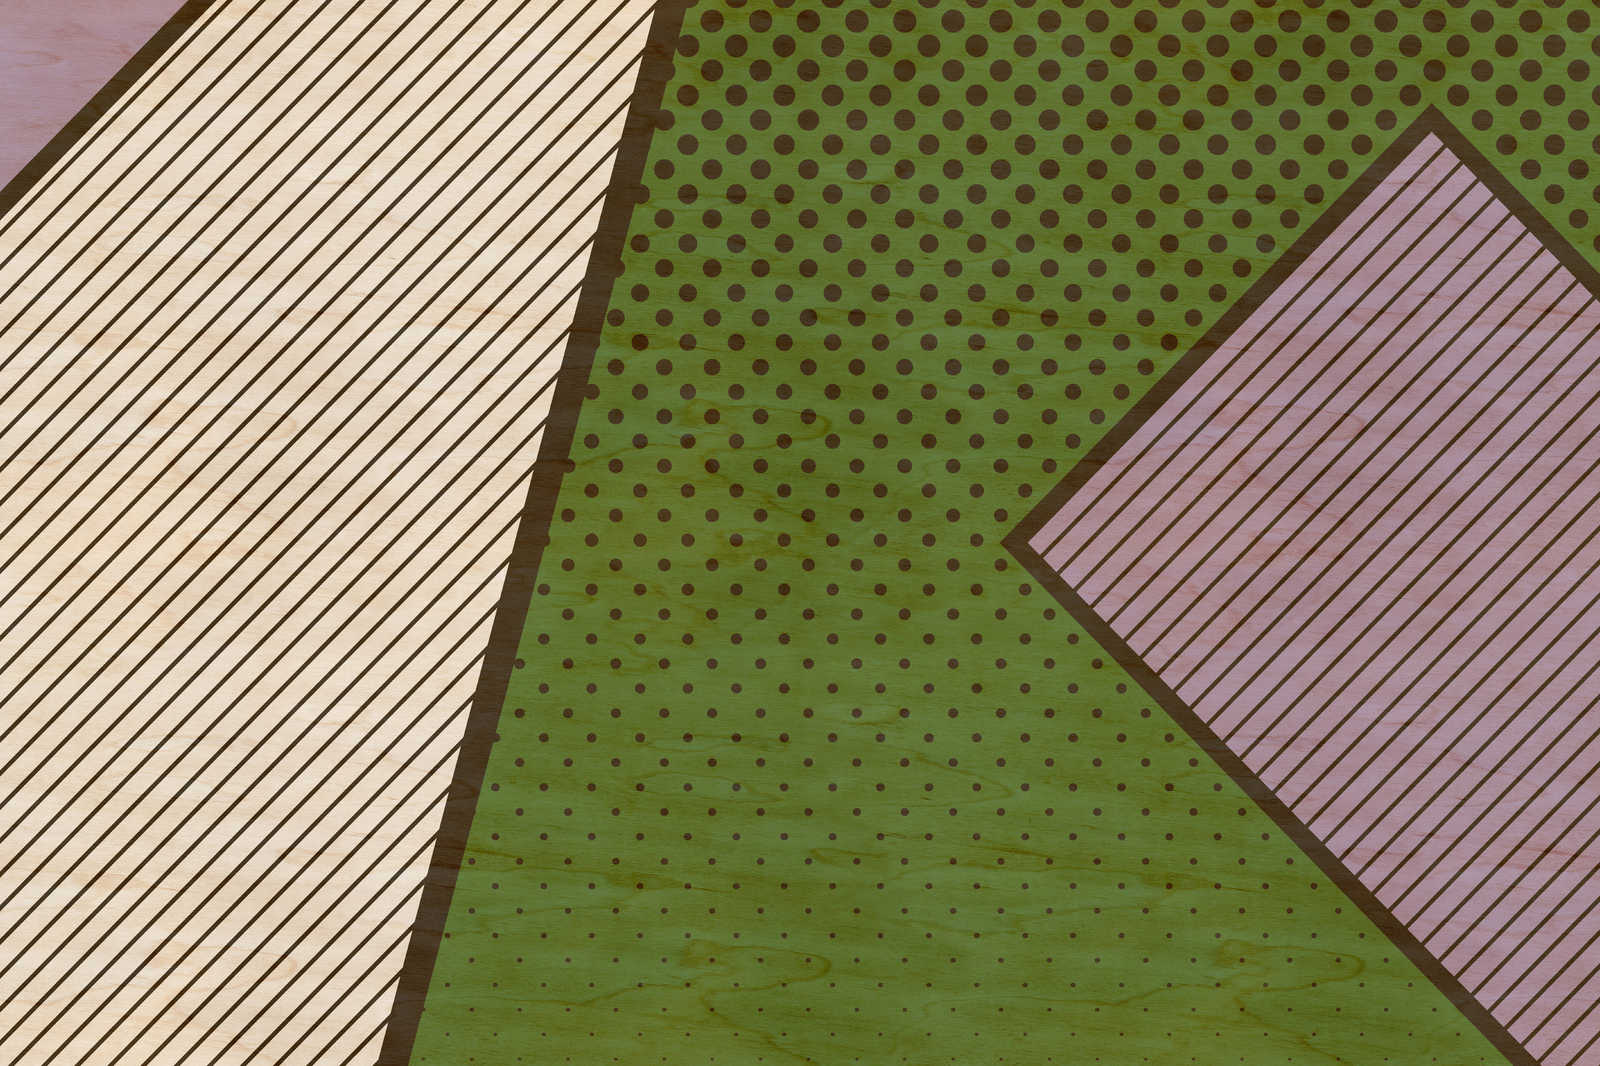             Bird gang 3 - Abstraktes Leinwandbild in Sperrholz Struktur mit bunte Farbflächen – 0,90 m x 0,60 m
        